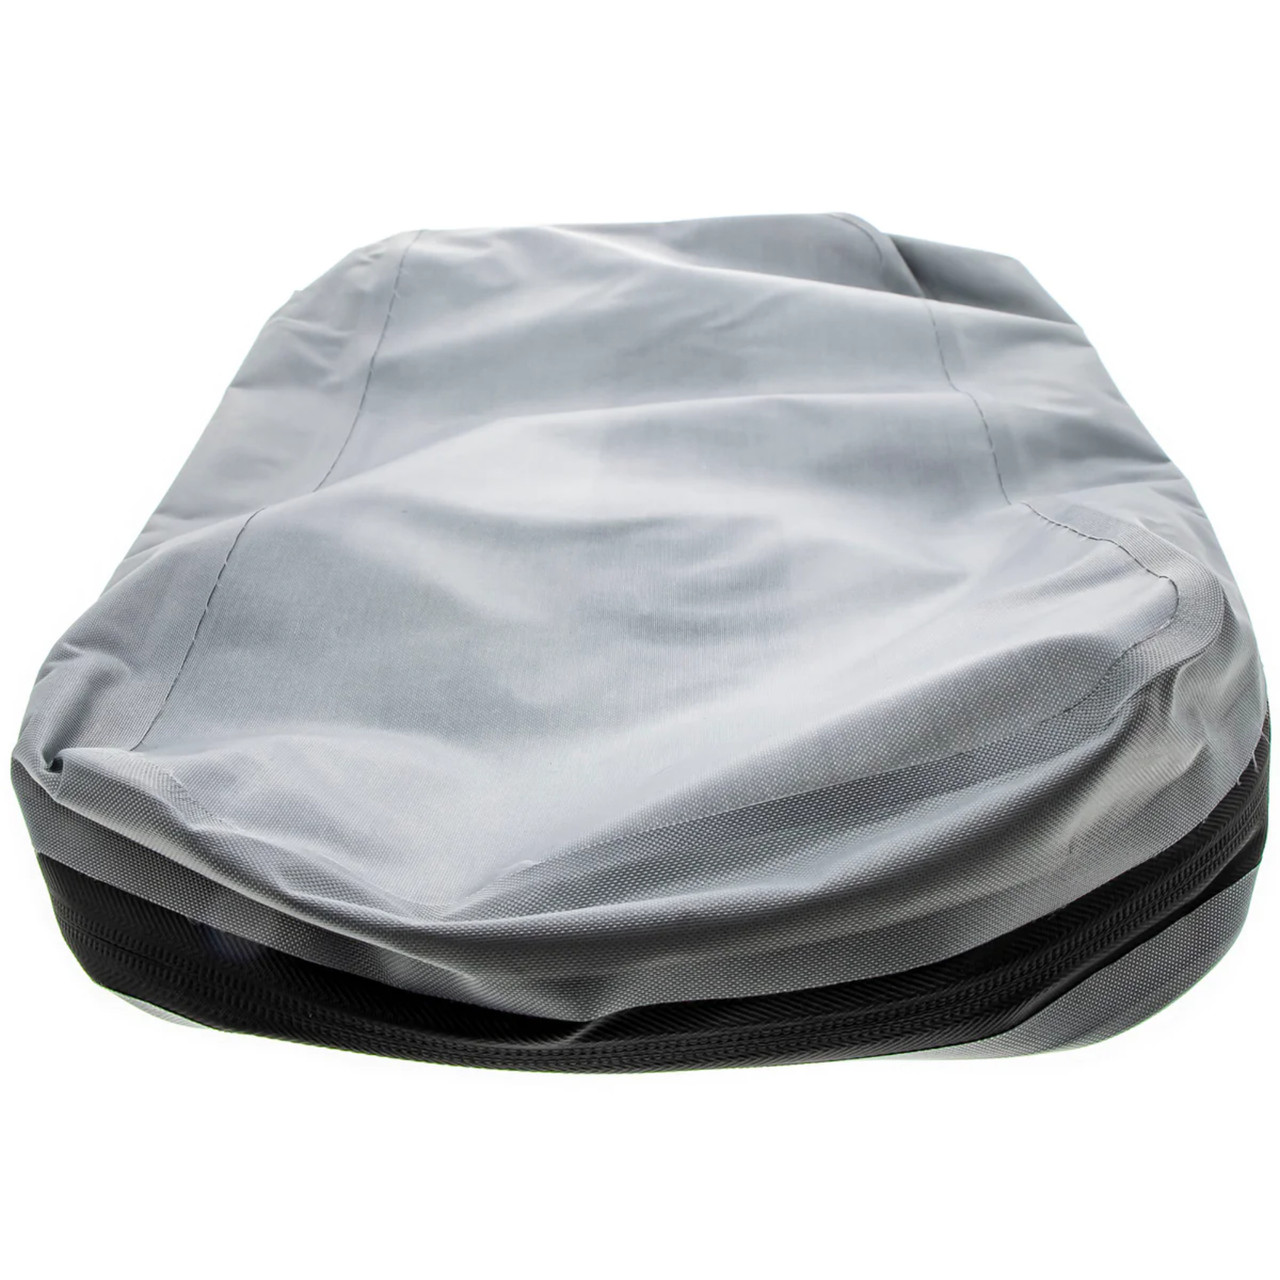 Polaris Snowmobile New OEM Lock & Ride Flex Burandt Large Liner Bag, 2889350